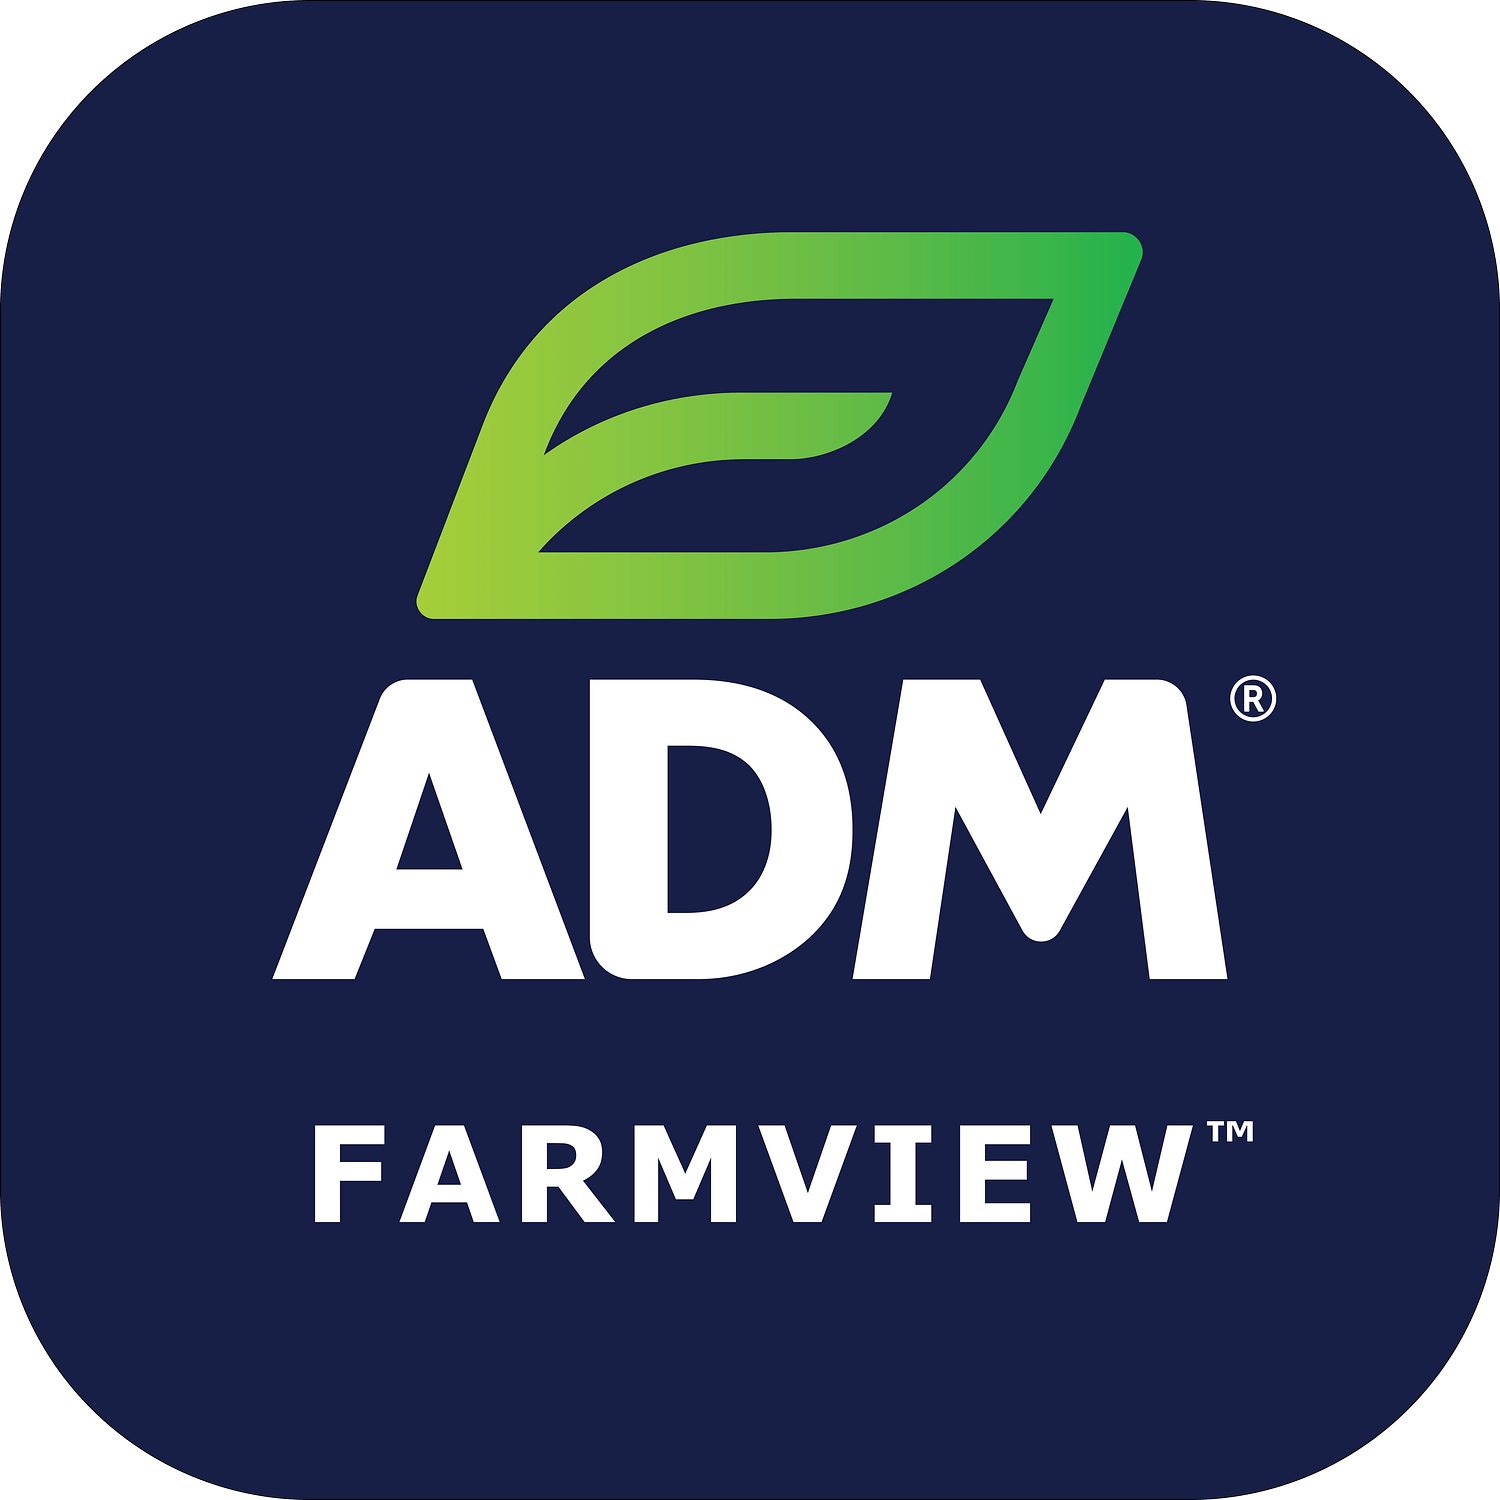 ADM farmview app icon